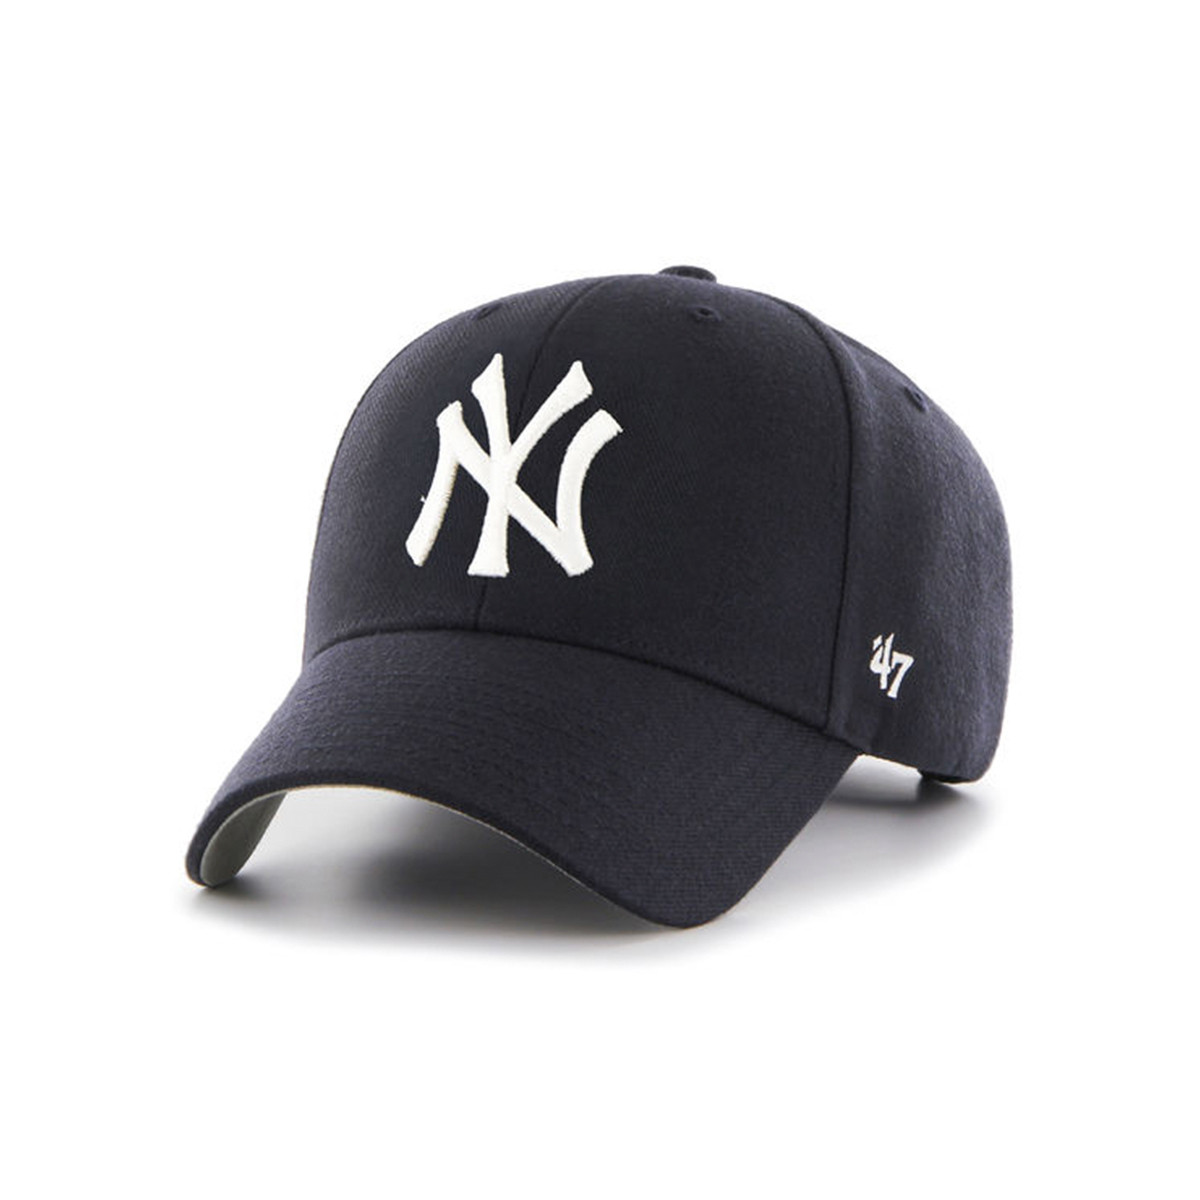 CAMOFILL New York Yankees navy 47 Brand Adjustable Cap 